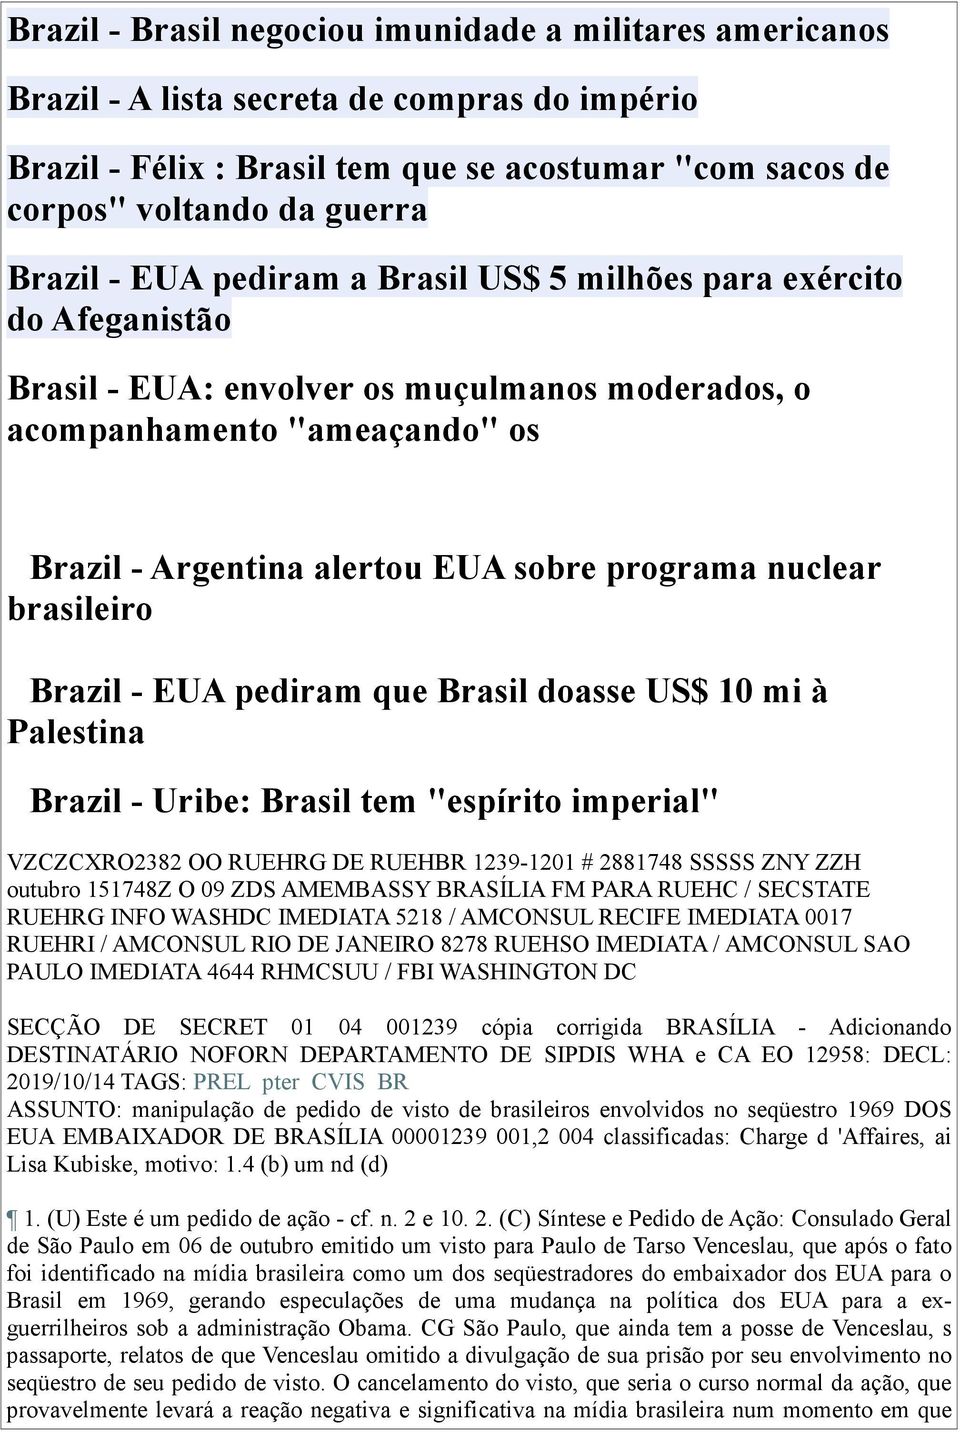 brasileiro Brazil - EUA pediram que Brasil doasse US$ 10 mi à Palestina Brazil - Uribe: Brasil tem "espírito imperial" VZCZCXRO2382 OO RUEHRG DE RUEHBR 1239-1201 # 2881748 SSSSS ZNY ZZH outubro